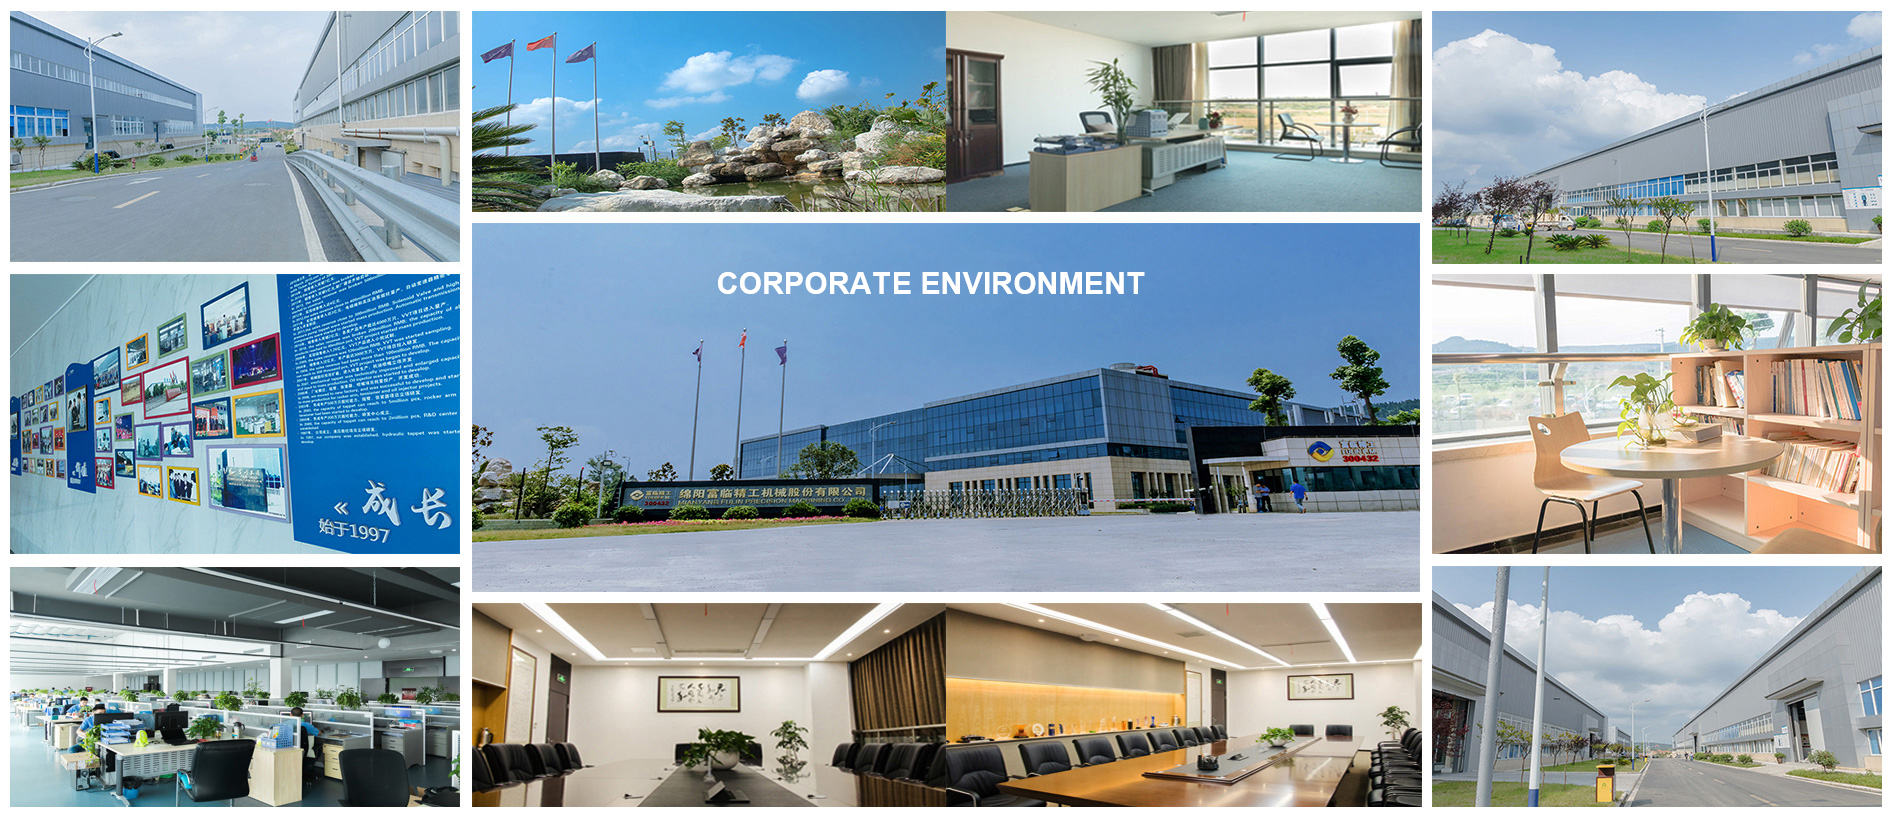 Corporate environment